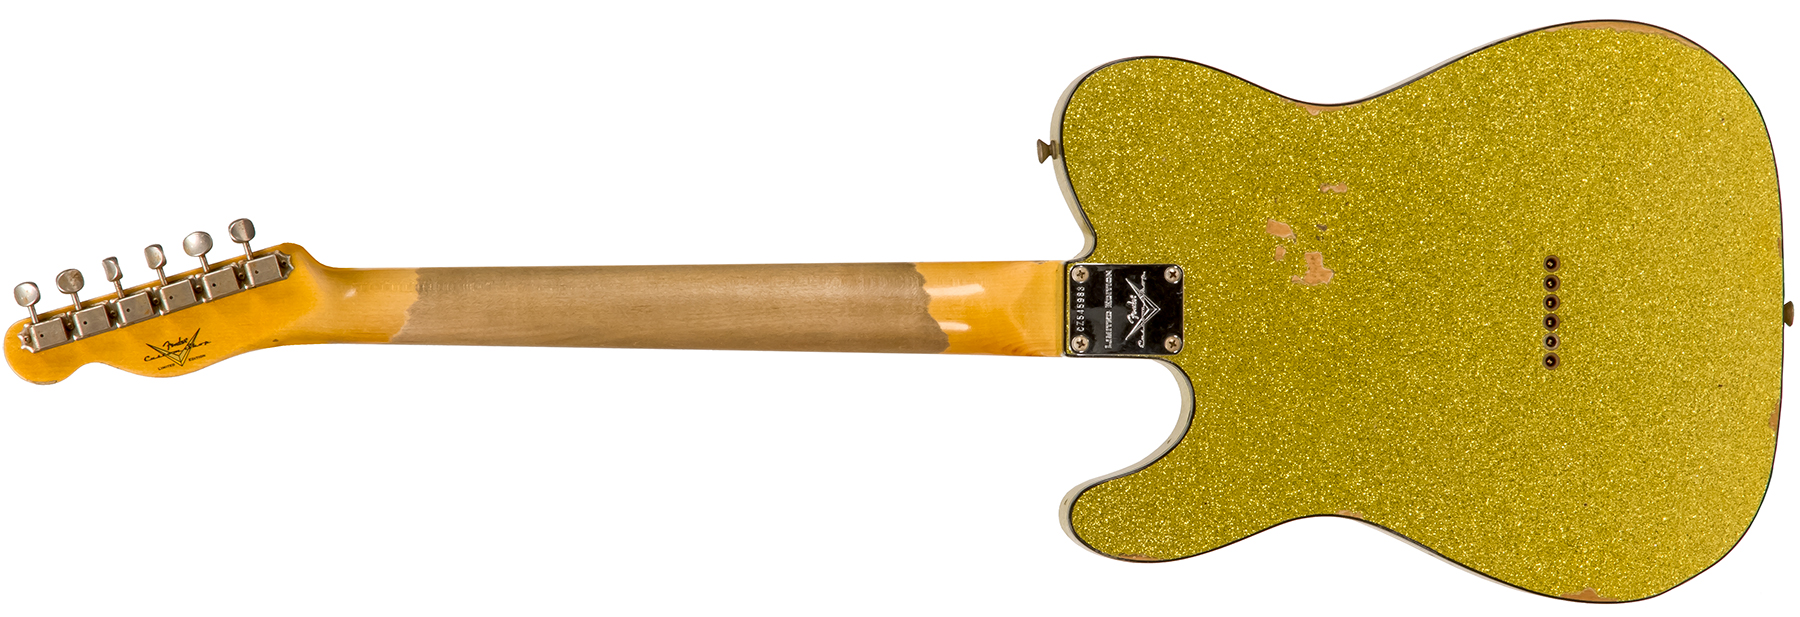 Fender Custom Shop Tele Custom 1963 2020 Ltd Rw #cz545983 - Relic Chartreuse Sparkle - Tel shape electric guitar - Variation 1